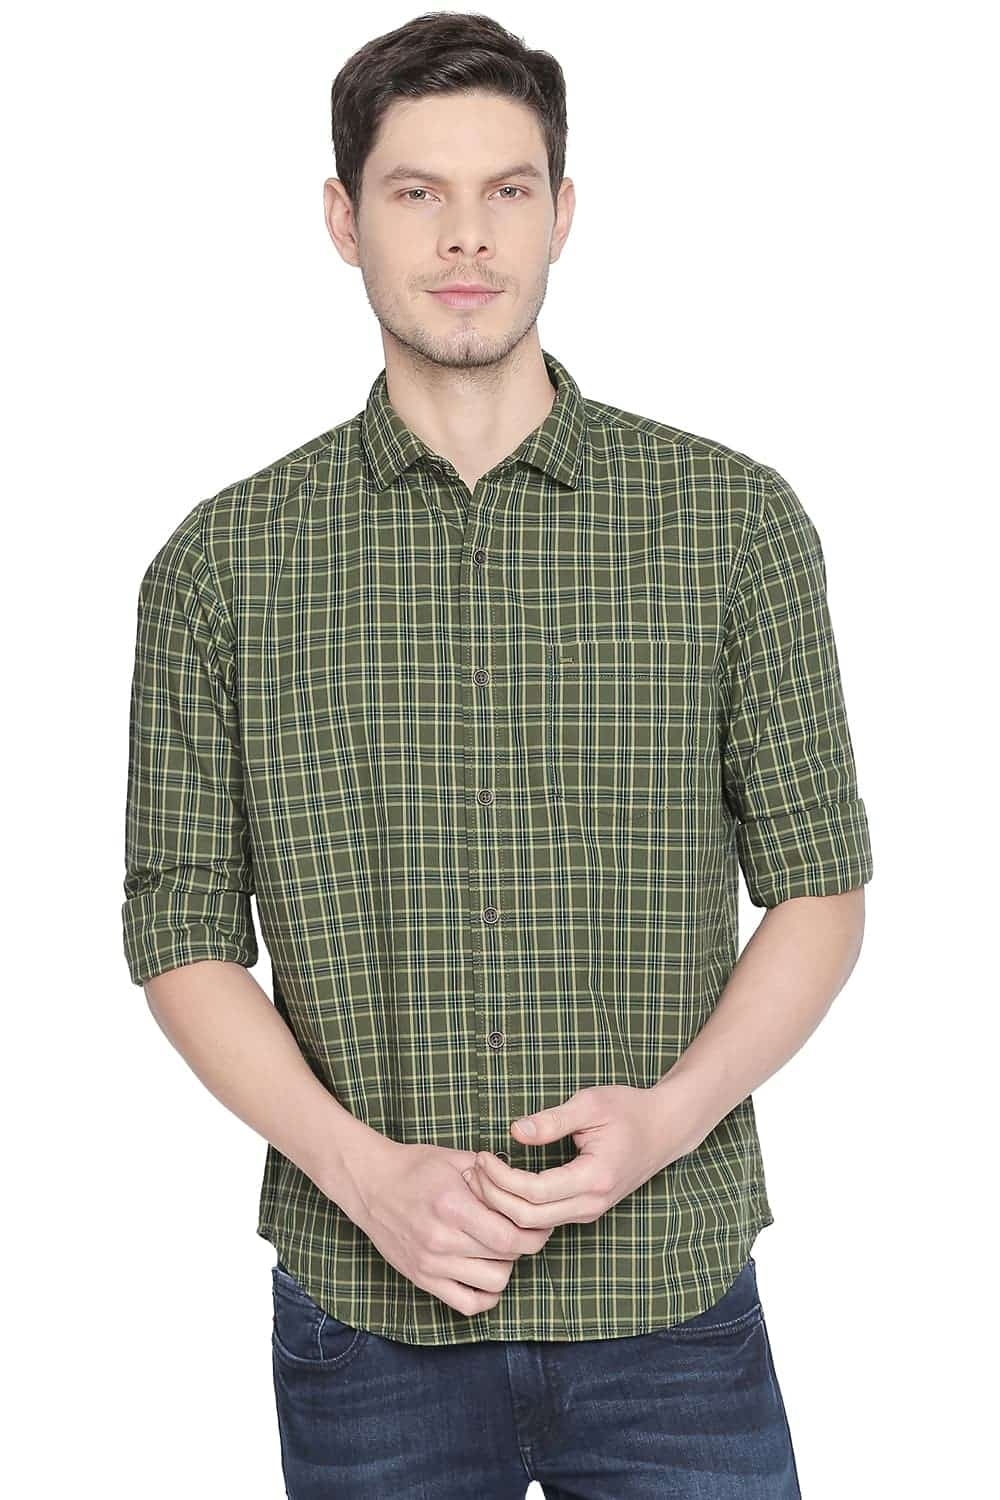 Basics | Basics Slim Fit Dill Green Checks Shirt